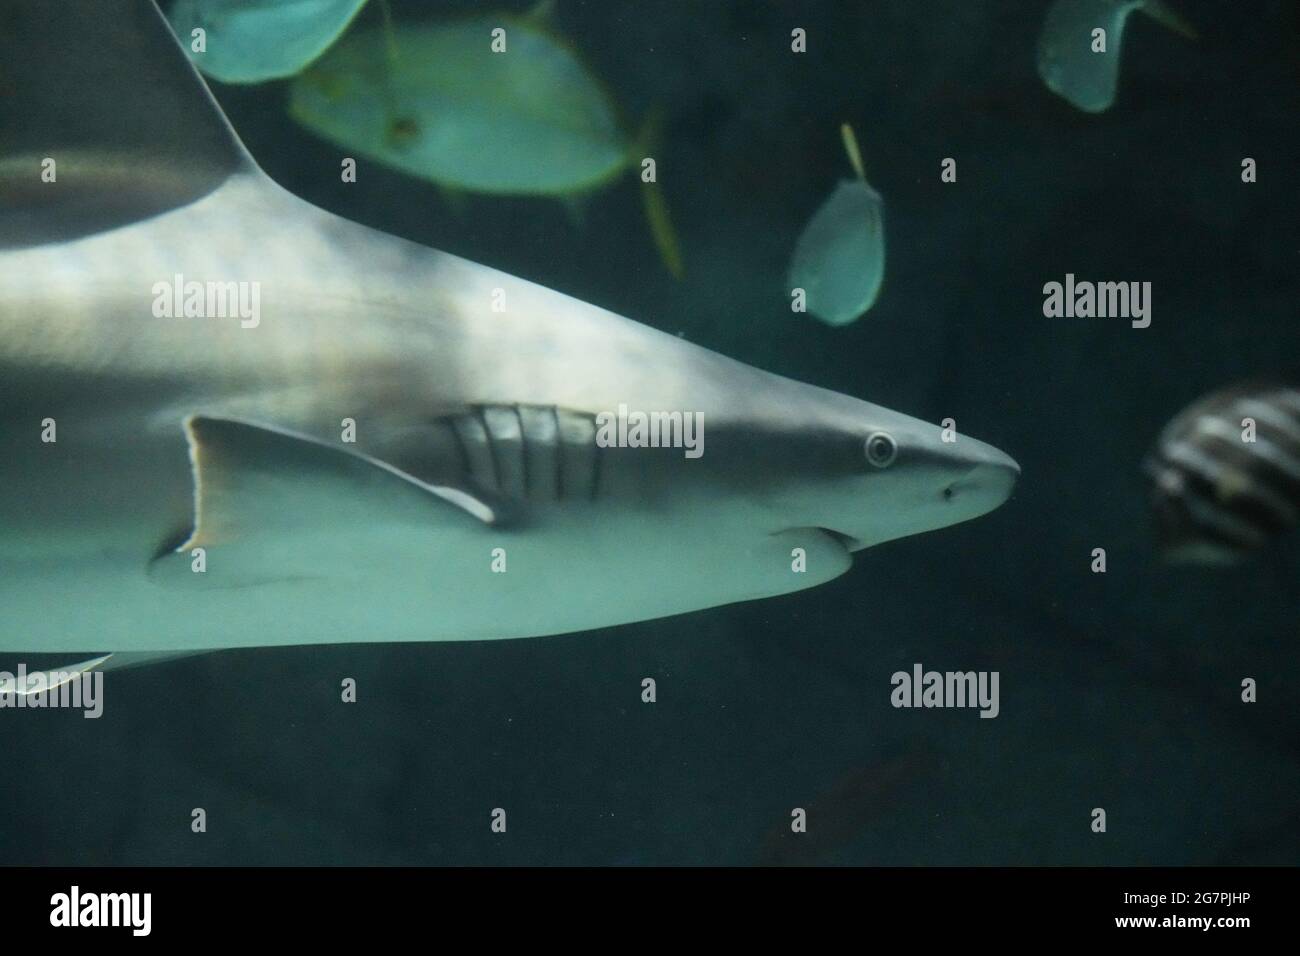 Sandbar shark hi-res stock photography and images - Page 2 - Alamy